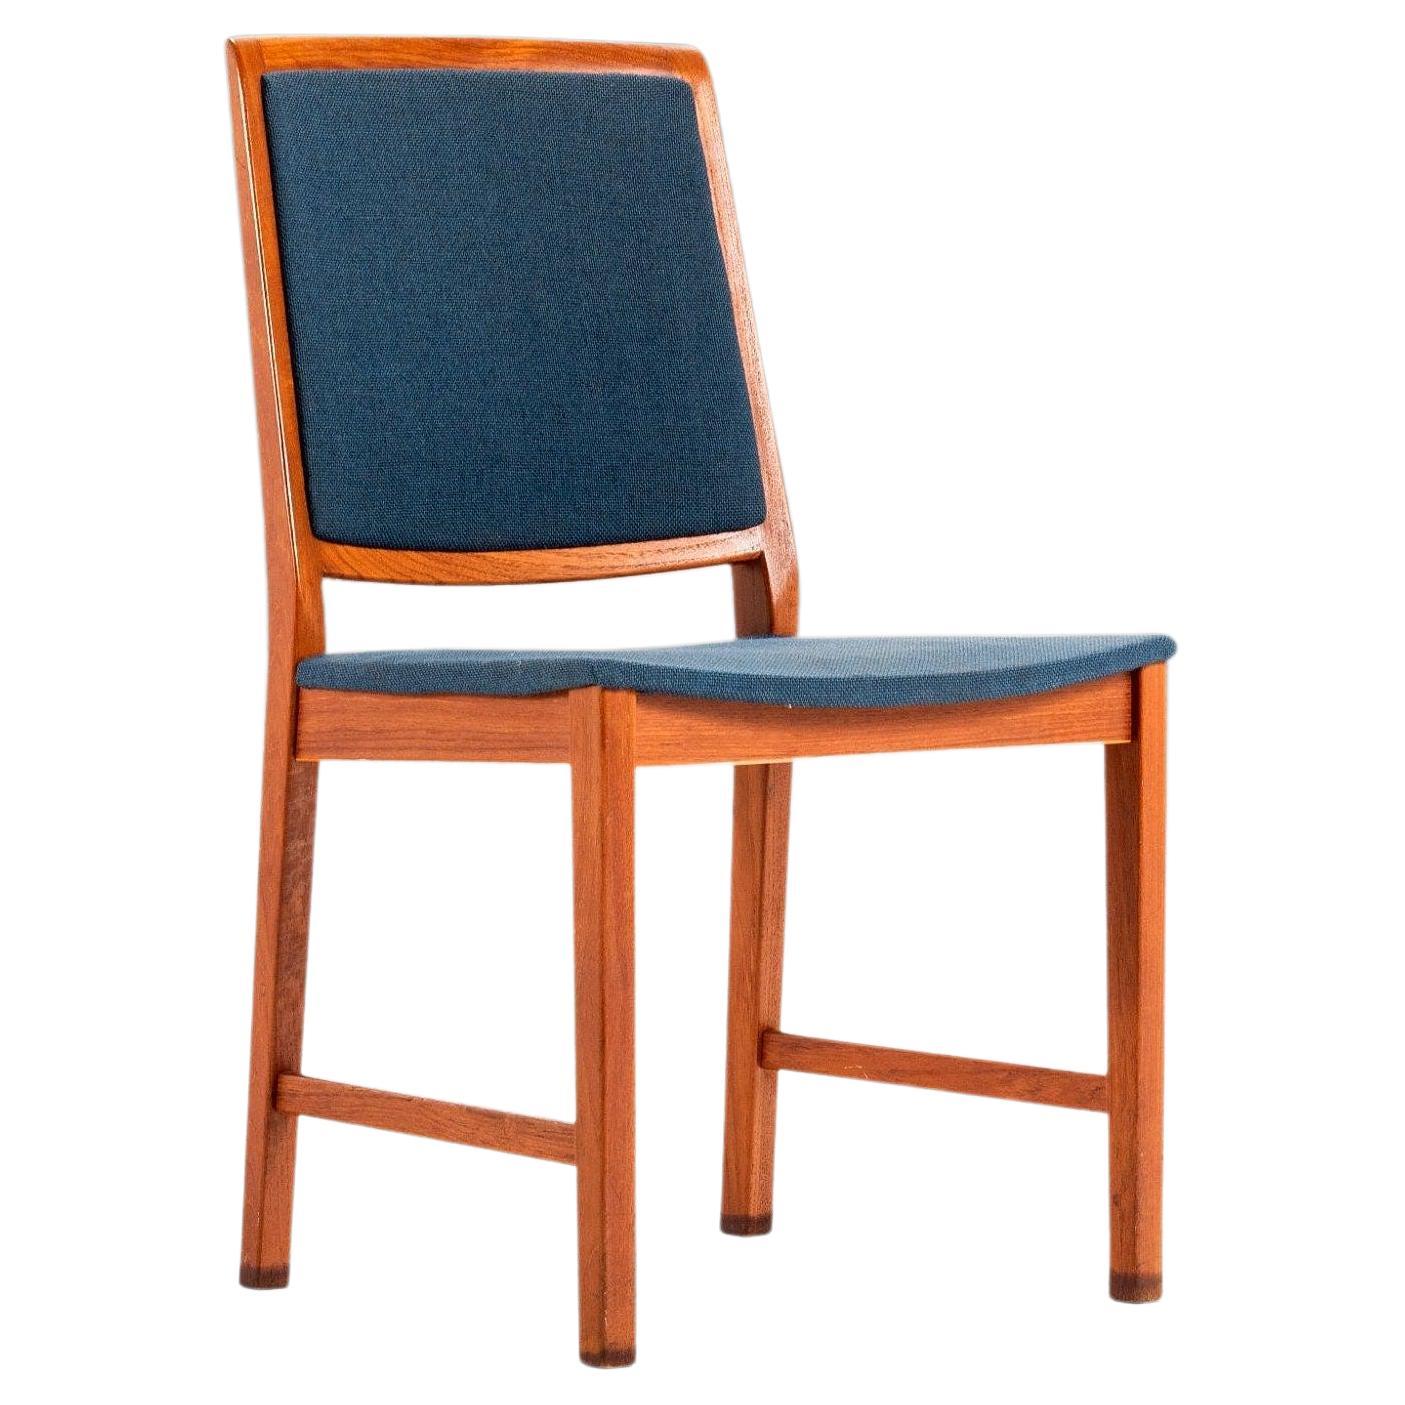 Dining Chair / Desk Chair in Teak by Skaraborgs Mobelindustri, Sweden, c. 1960's For Sale